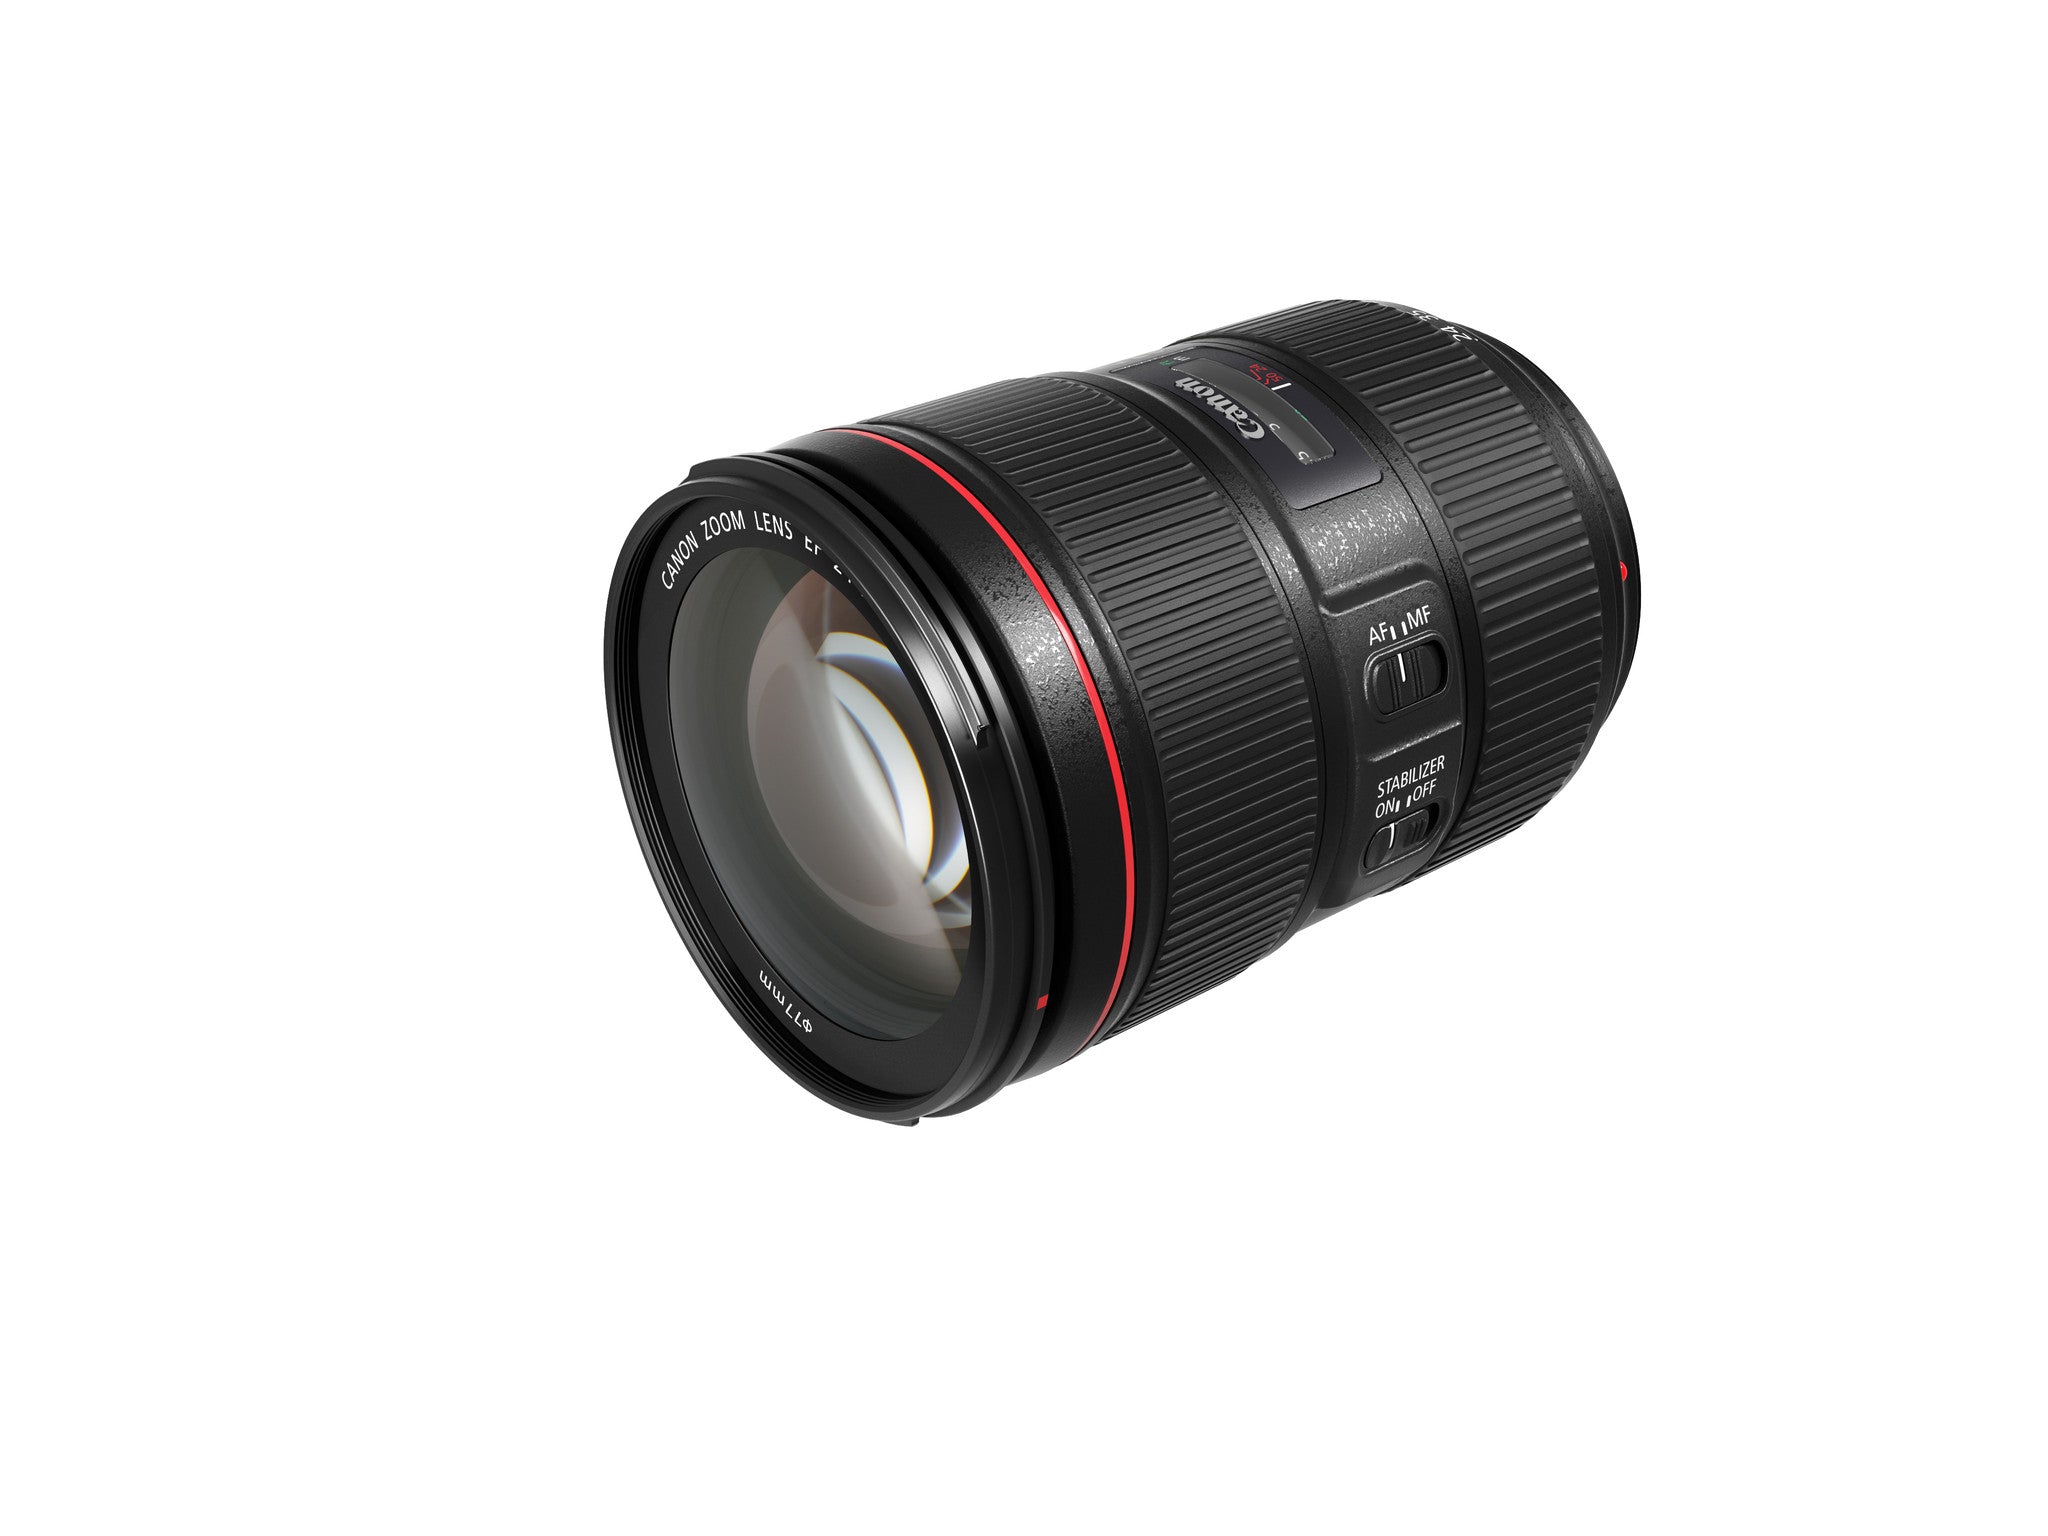 Canon EF 24-105mm f/4L IS II USM Lens, lenses slr lenses, Canon - Pictureline  - 3